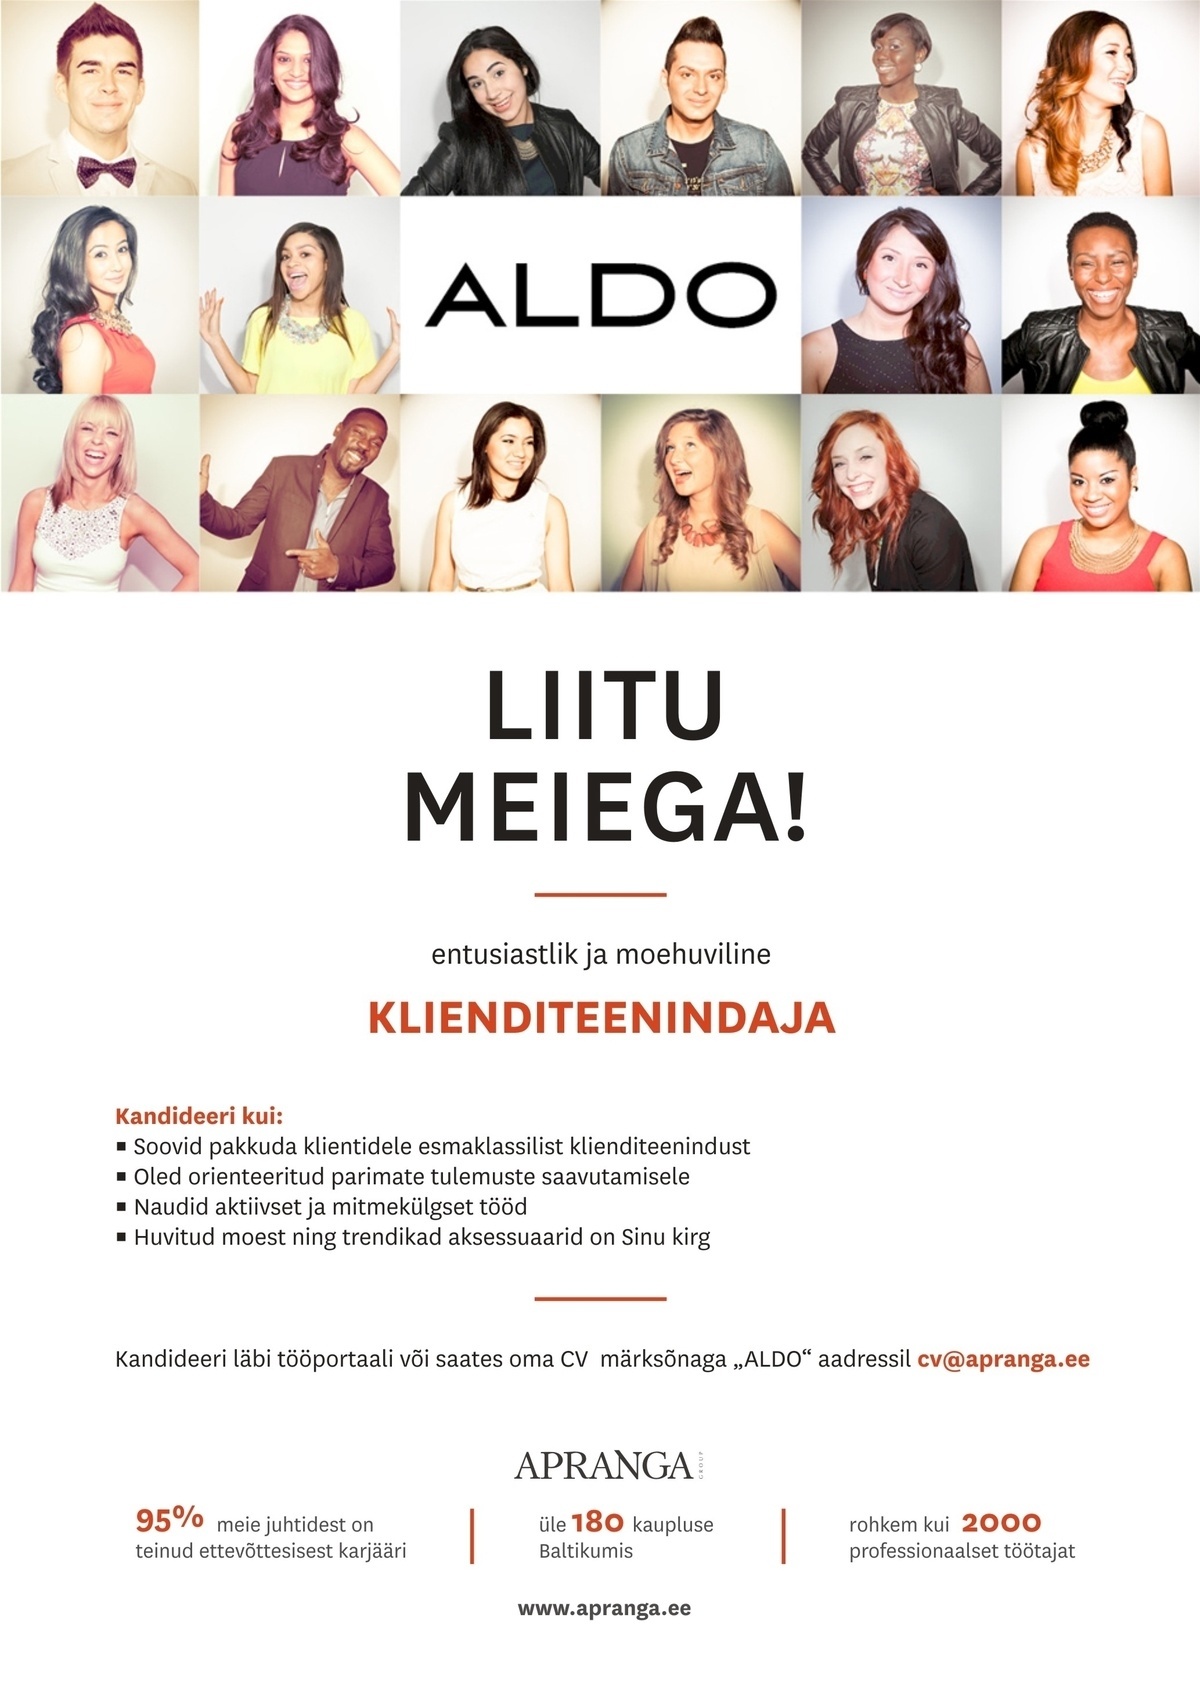 Apranga Estonia OÜ ALDO kaupluse vastutav klienditeenindaja